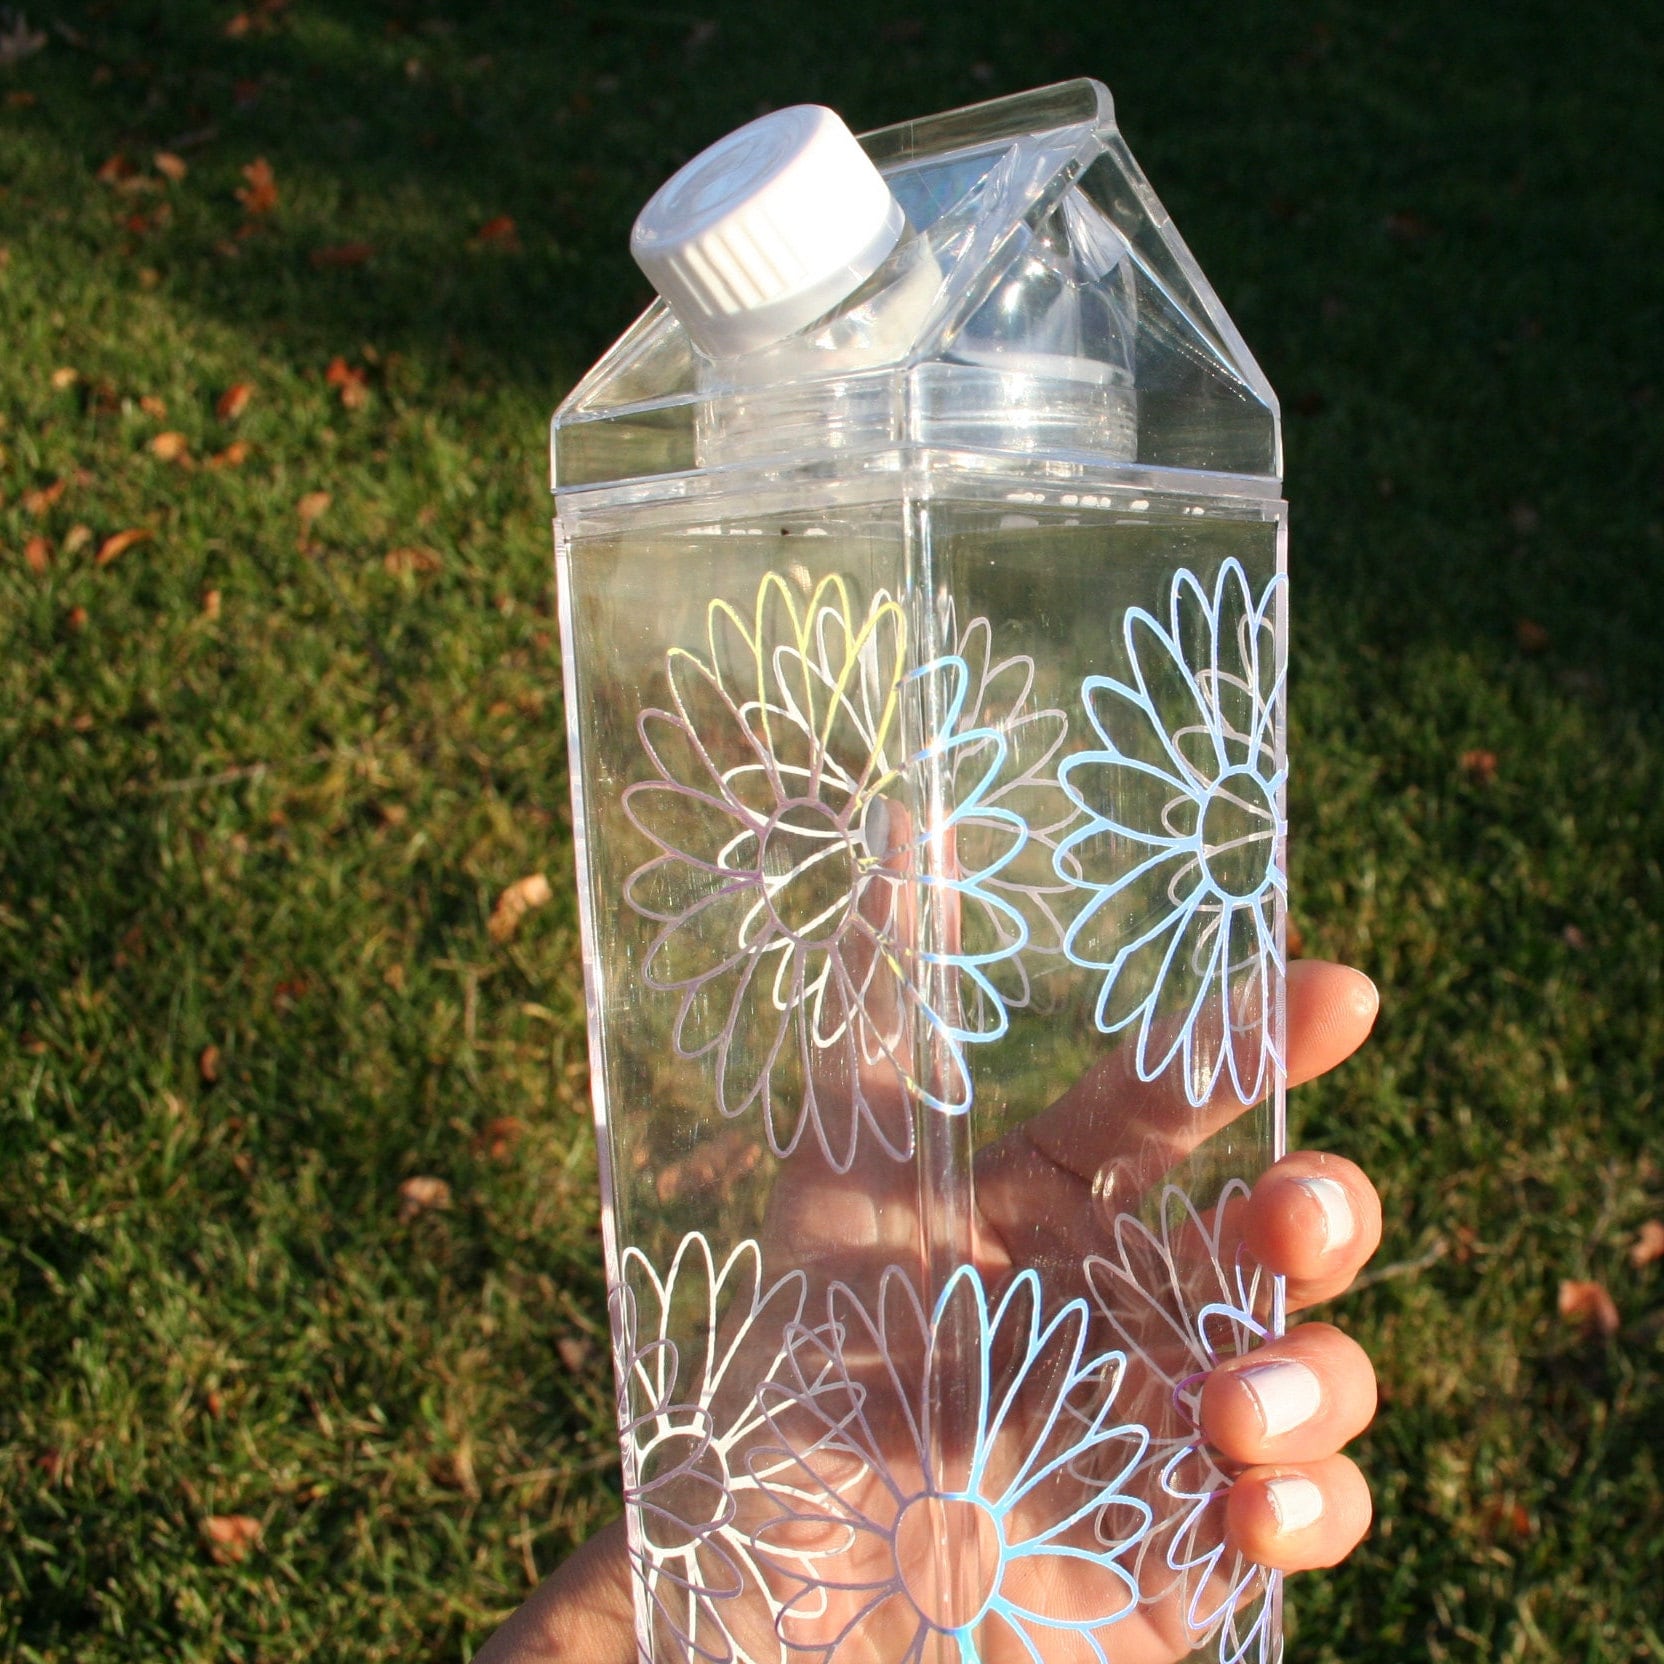 Milk Carton Glitter Water Bottle - Rose